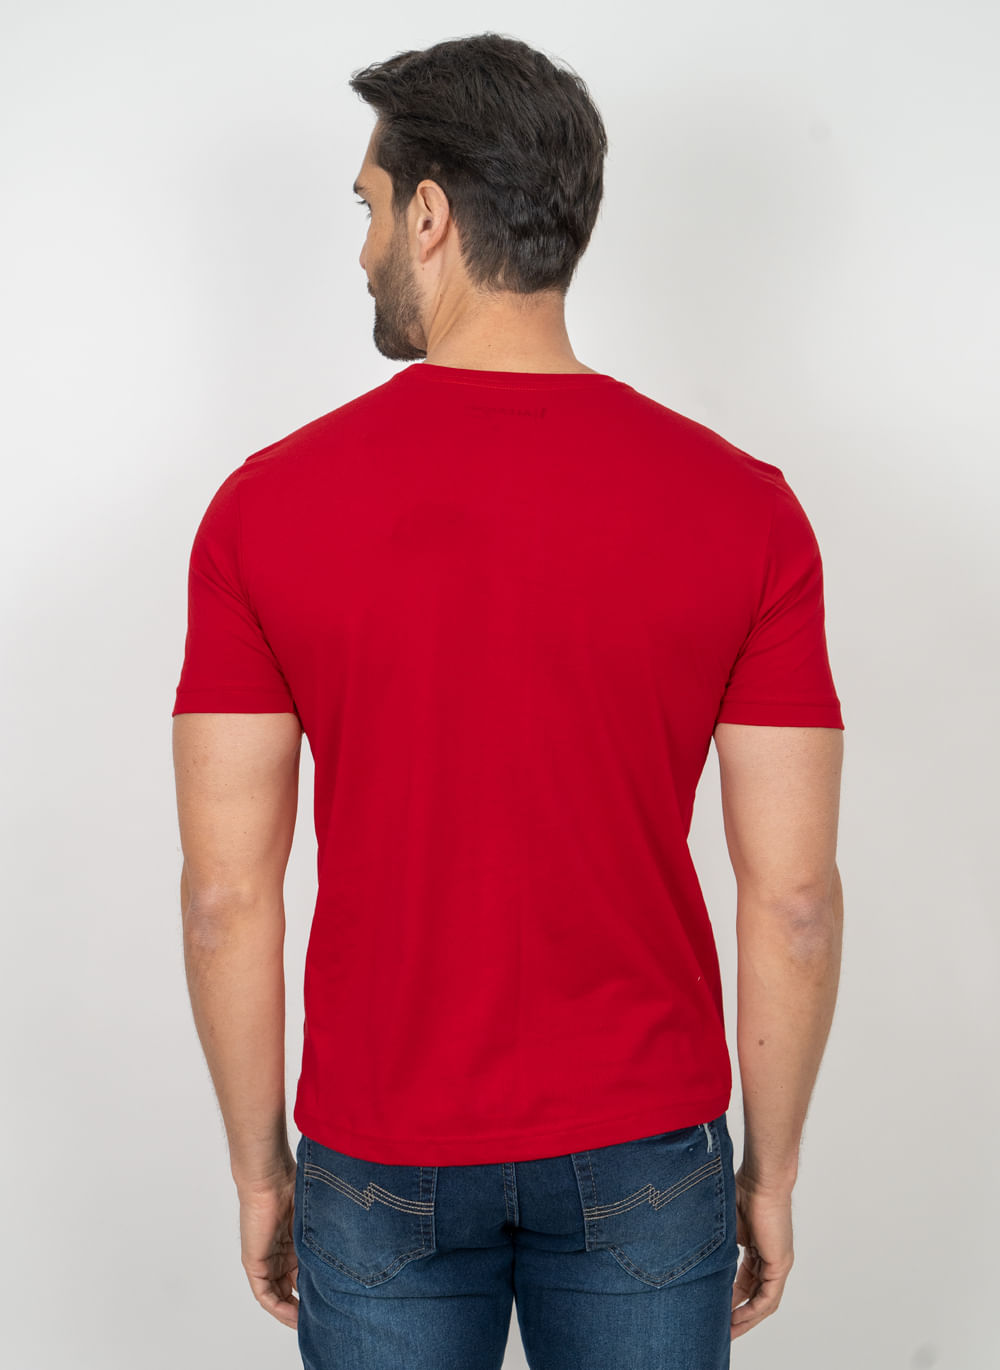 Camiseta-Basica-Aleatory-Fit-Vermelha-Vermelho-P